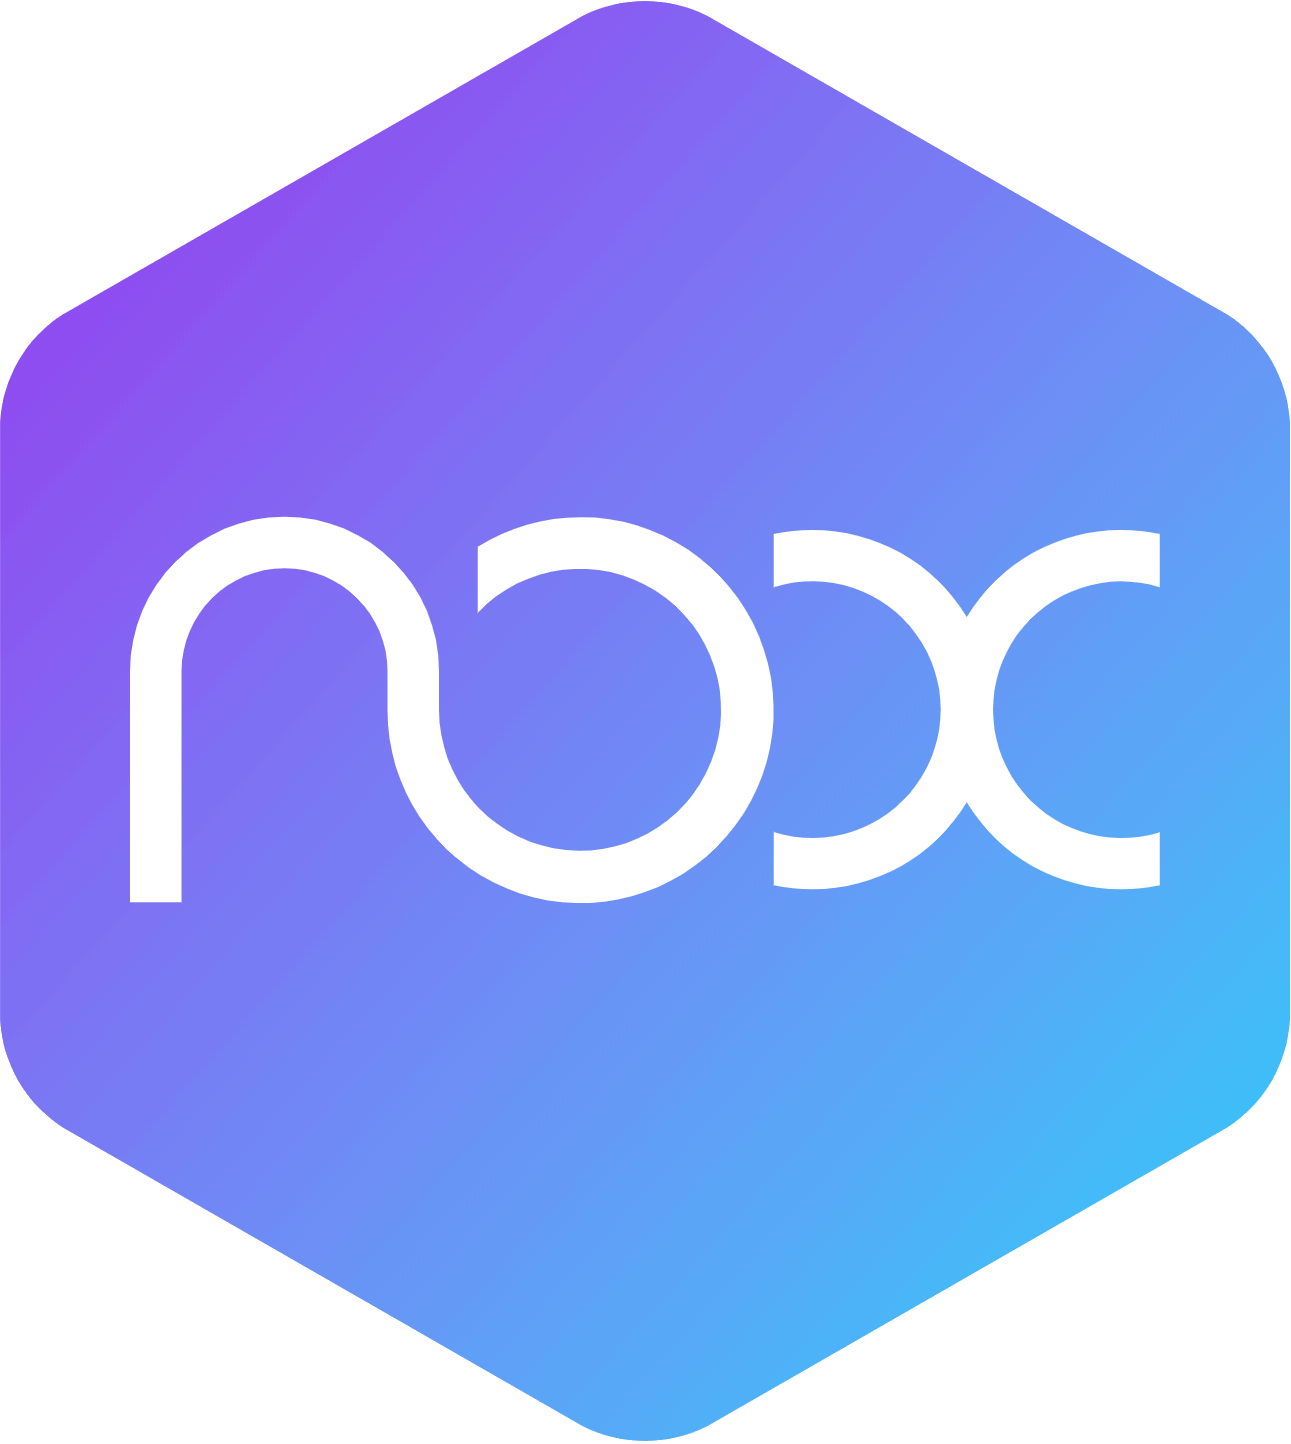 nox app emulator for mac